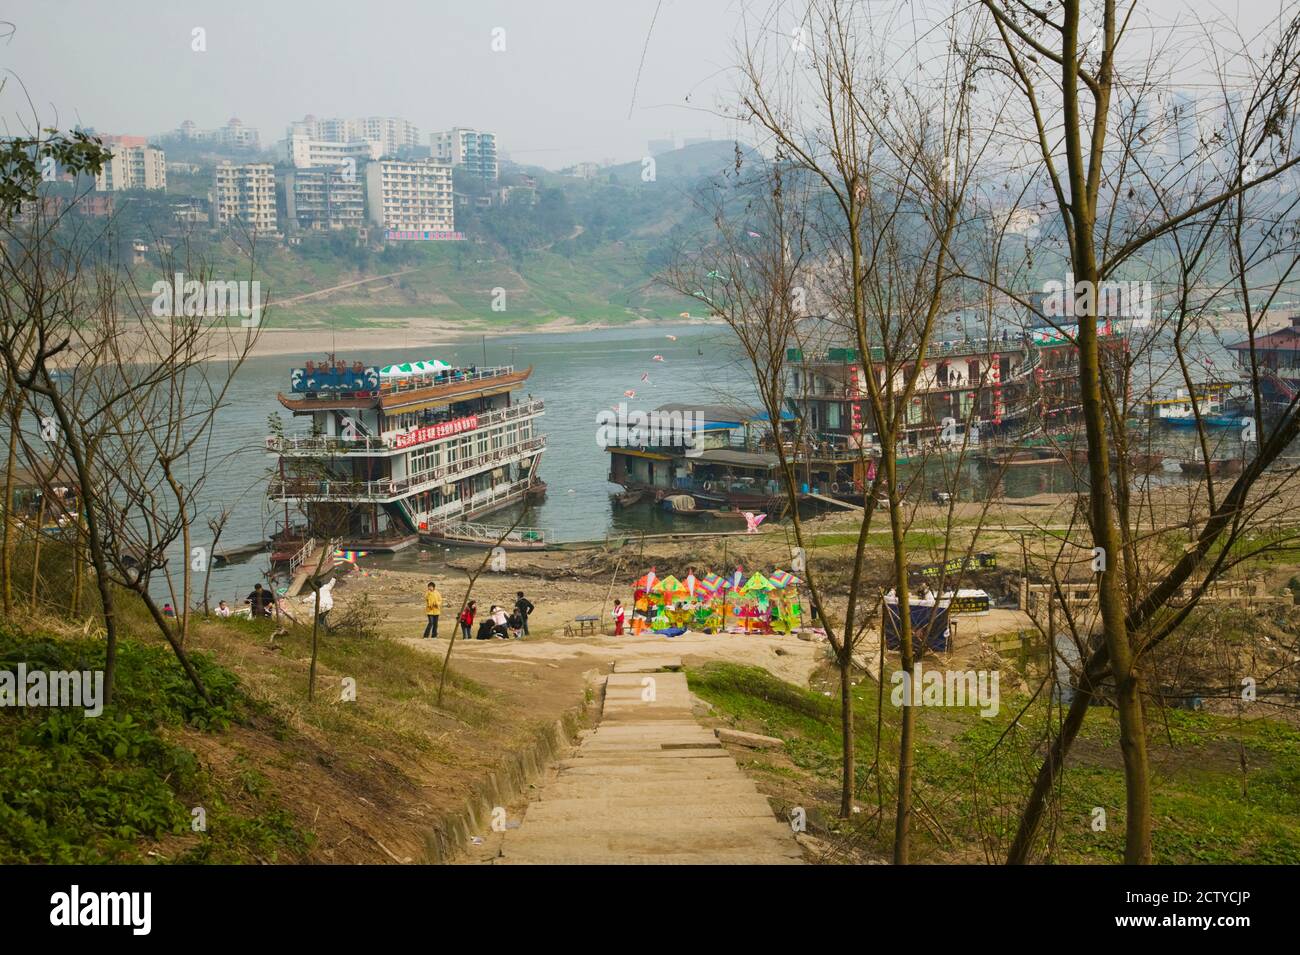 Waterfront area with visitors, Ciqikou, Chongqing, China Stock Photo